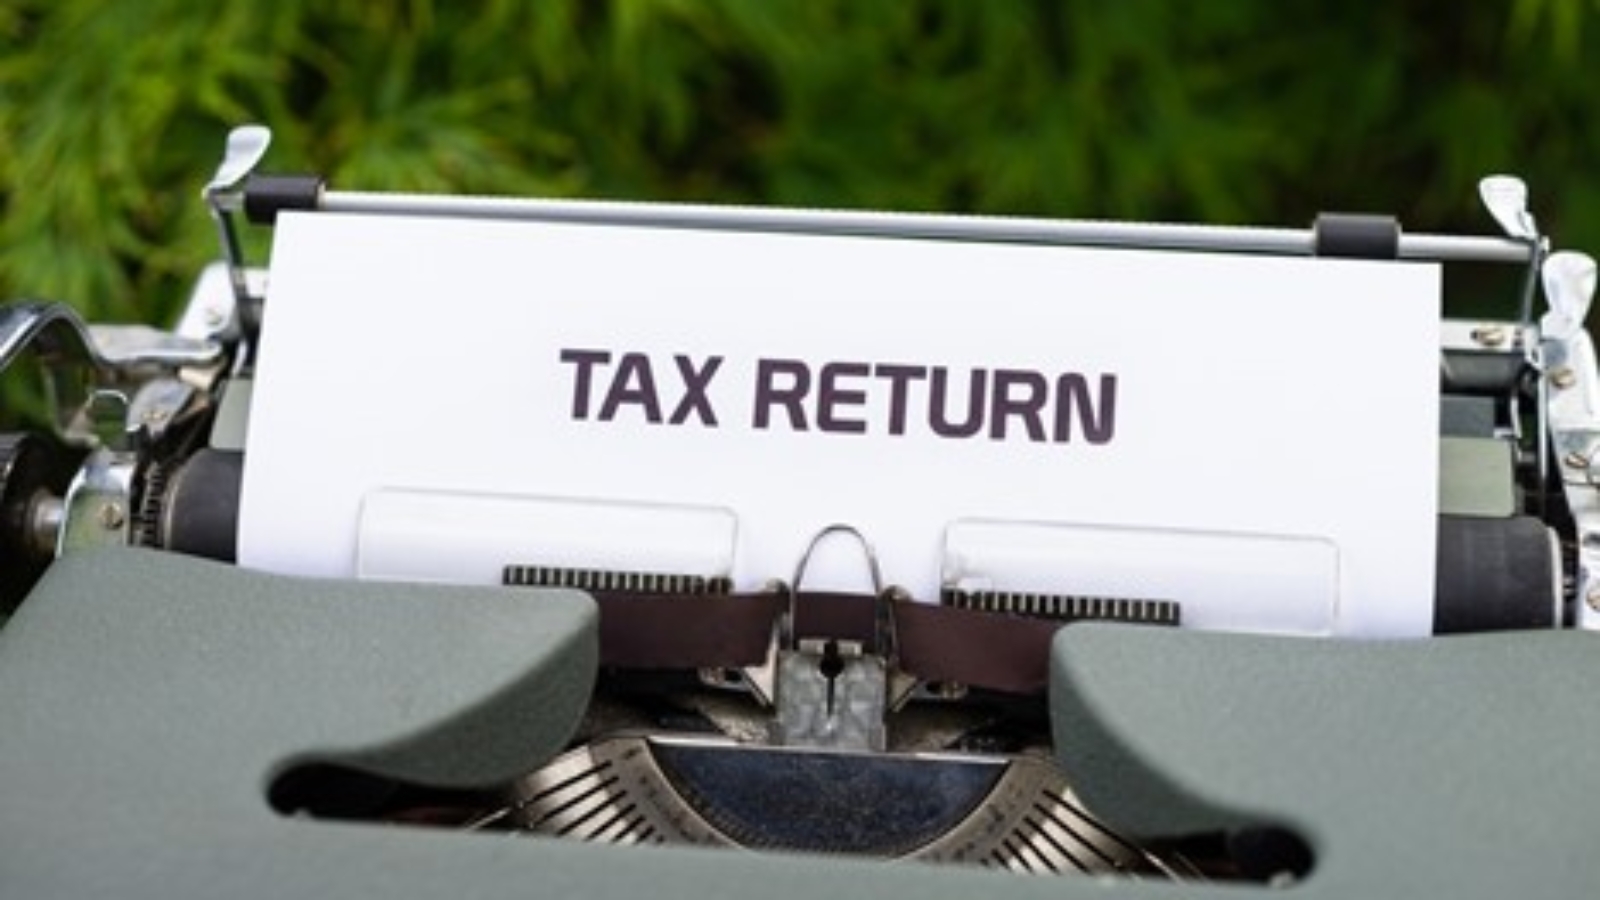 Tax return printed via a typewriter